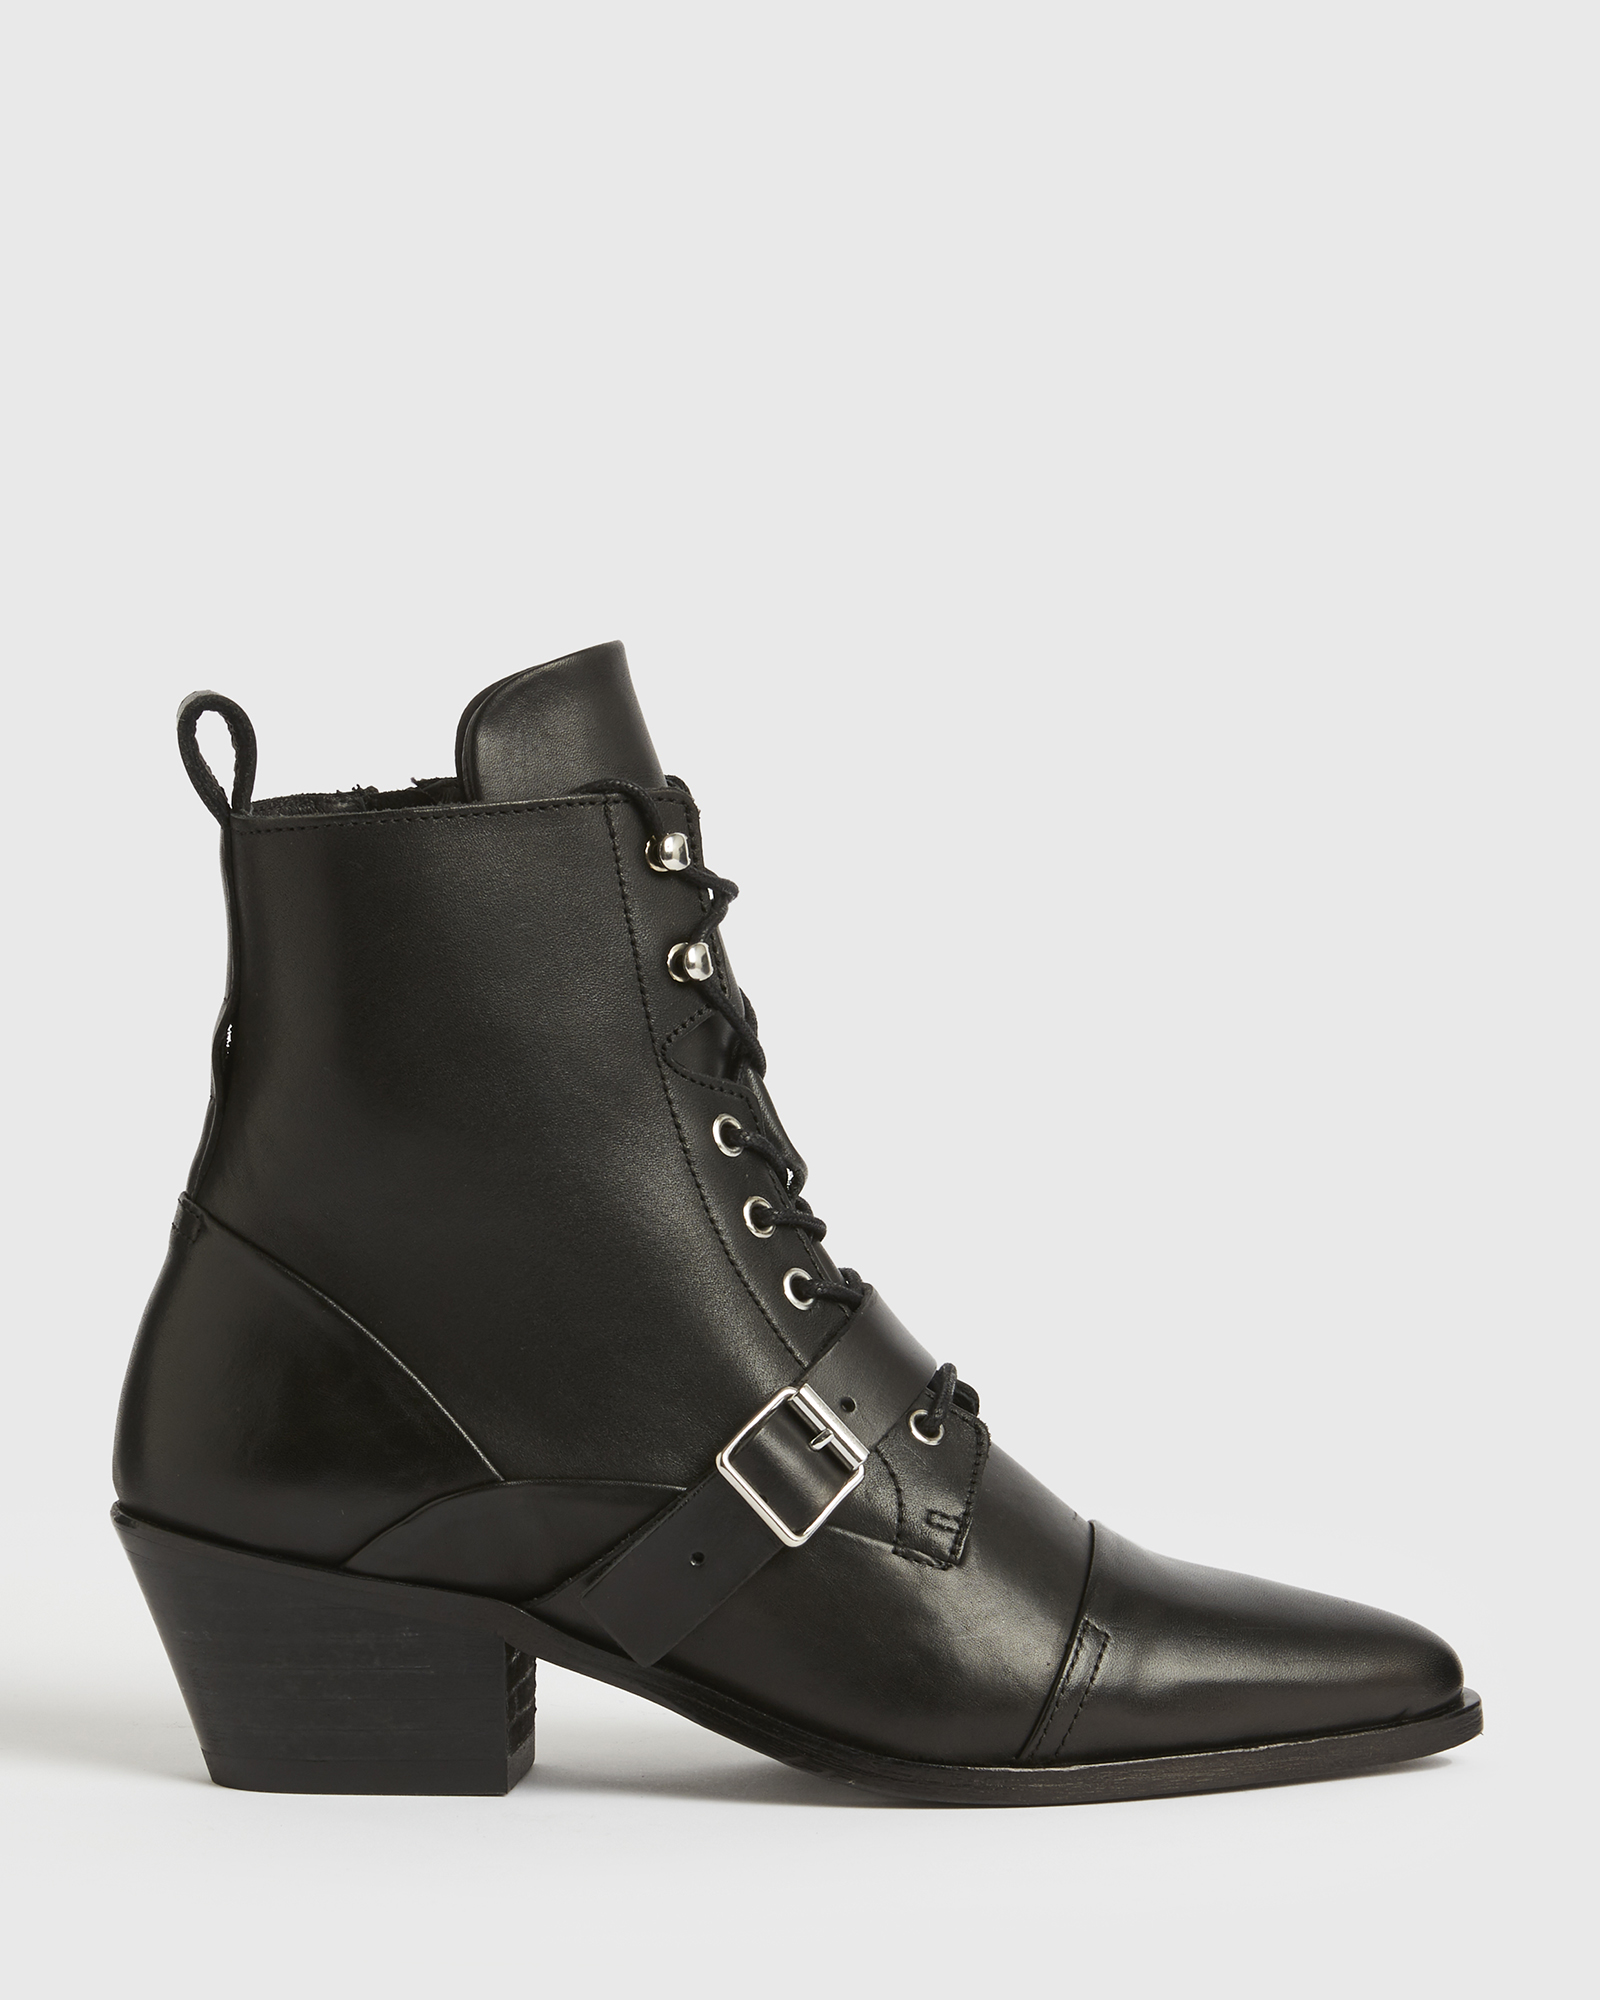 AllSaints Women's Leather Katy Boots, Black, Size: UK 3